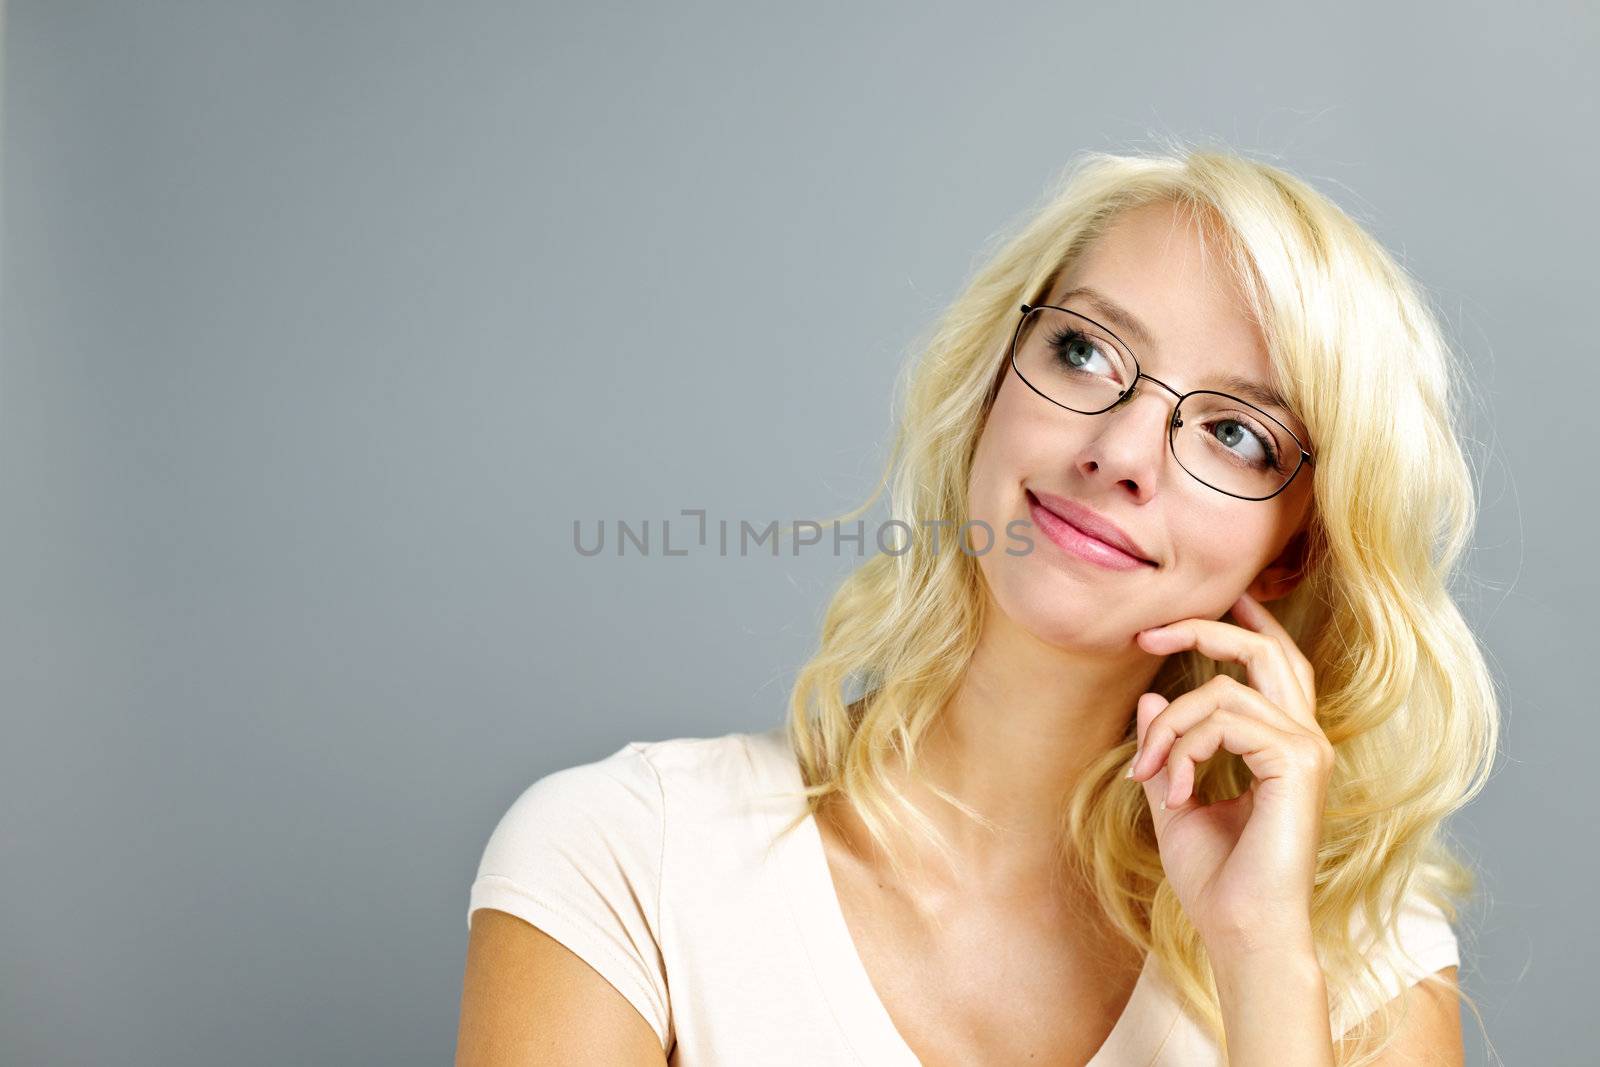 Thoughtful woman wearing glasses by elenathewise